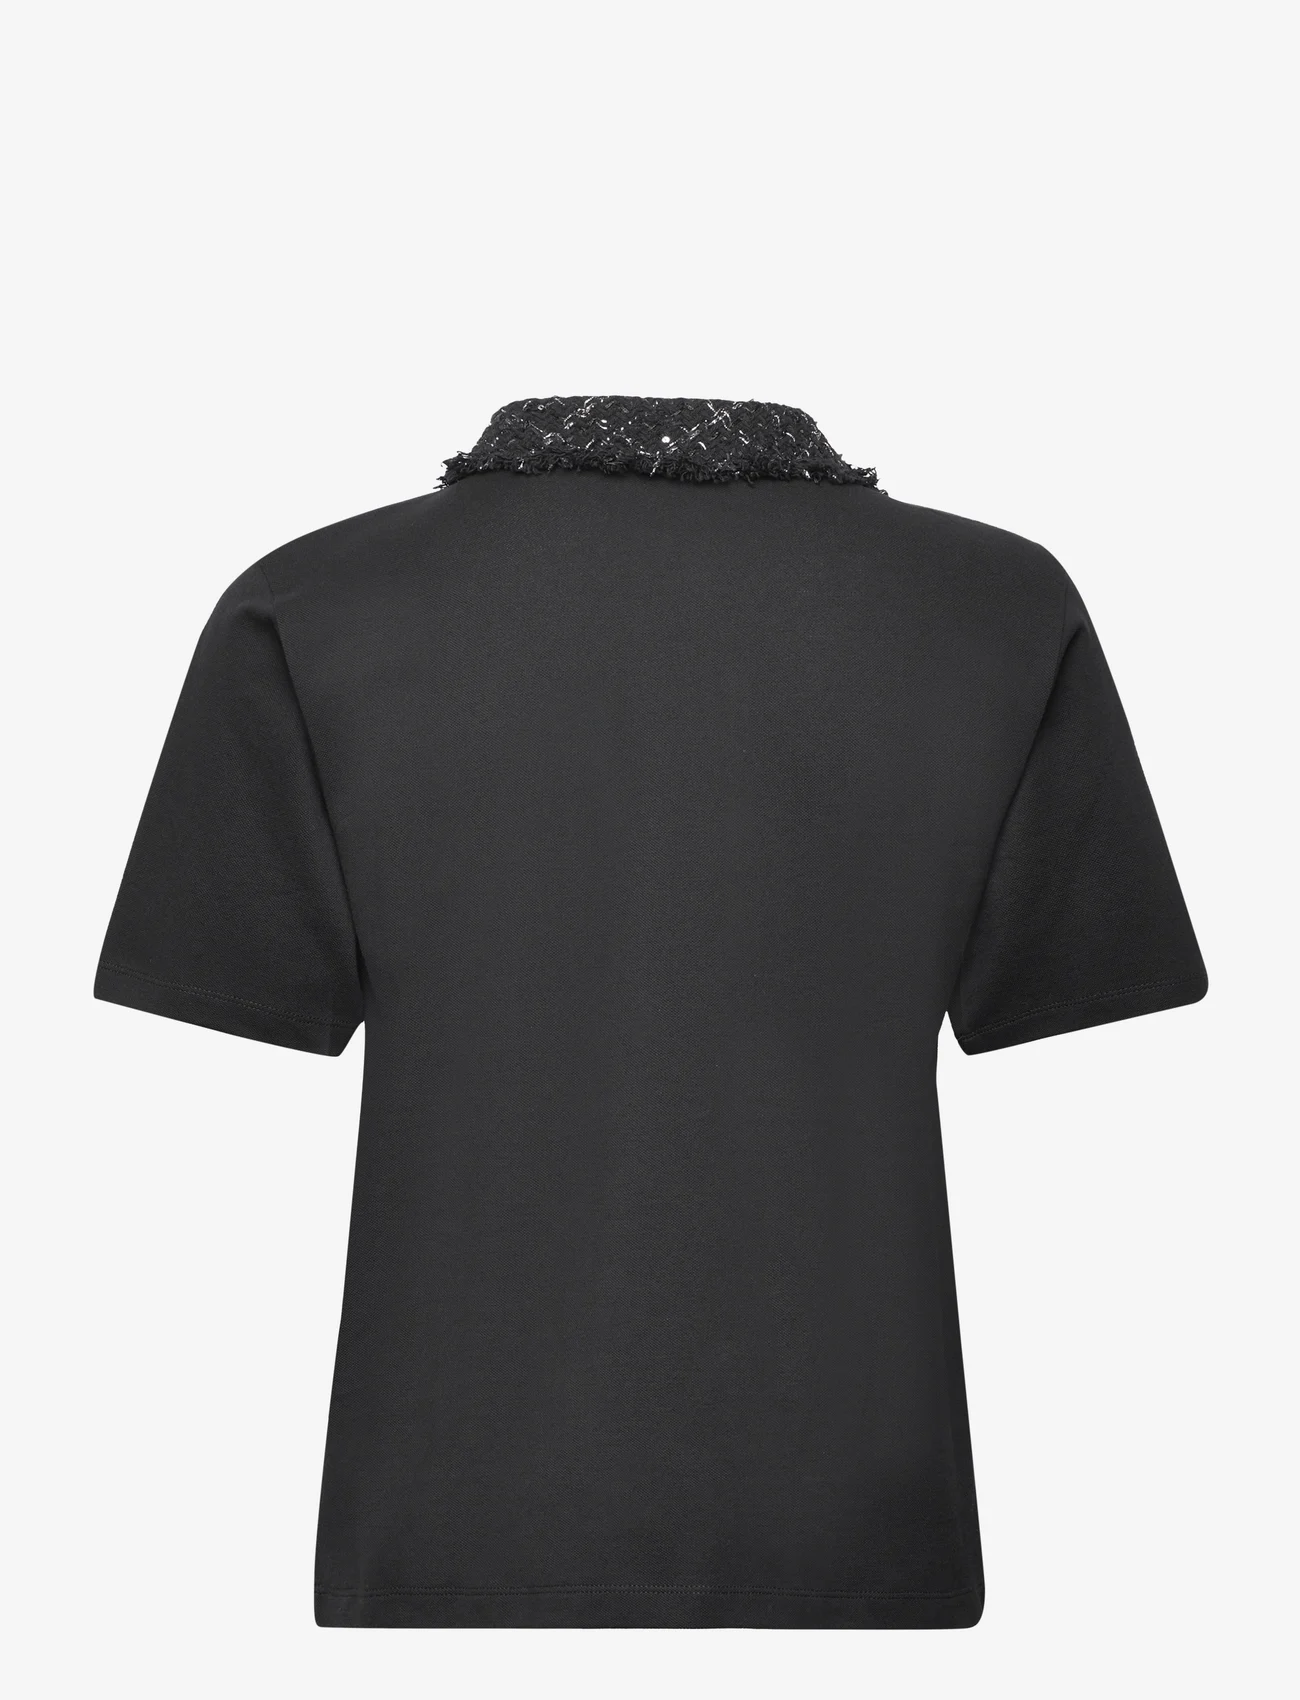 Karl Lagerfeld - boucle polo t-shirt - poloer - black - 1